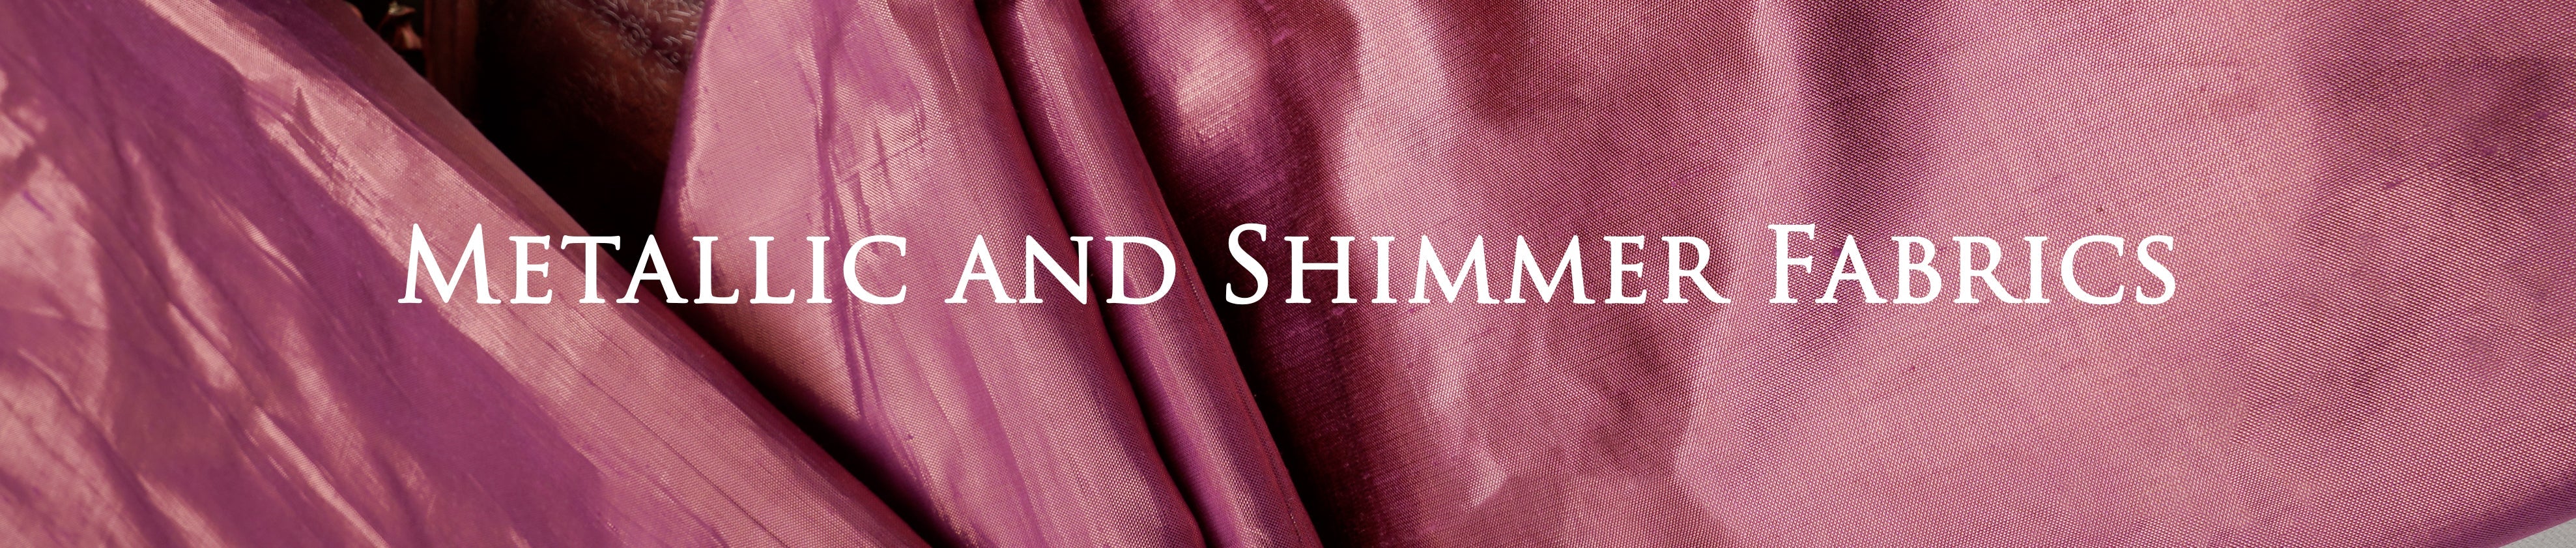 Metalllic & shimmer fabric